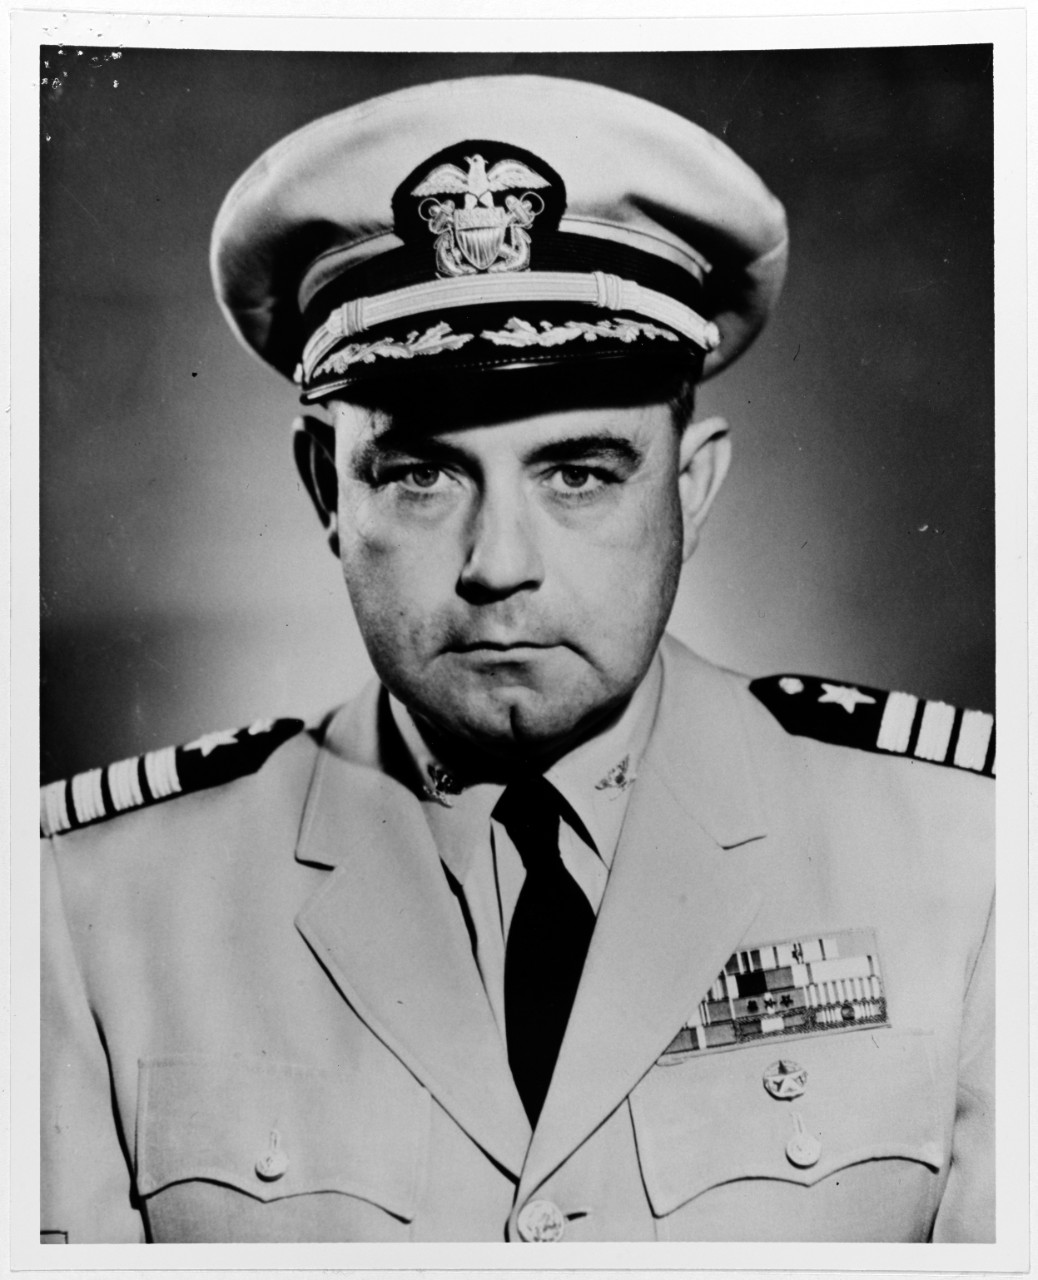 Captain James R. Collier, USN